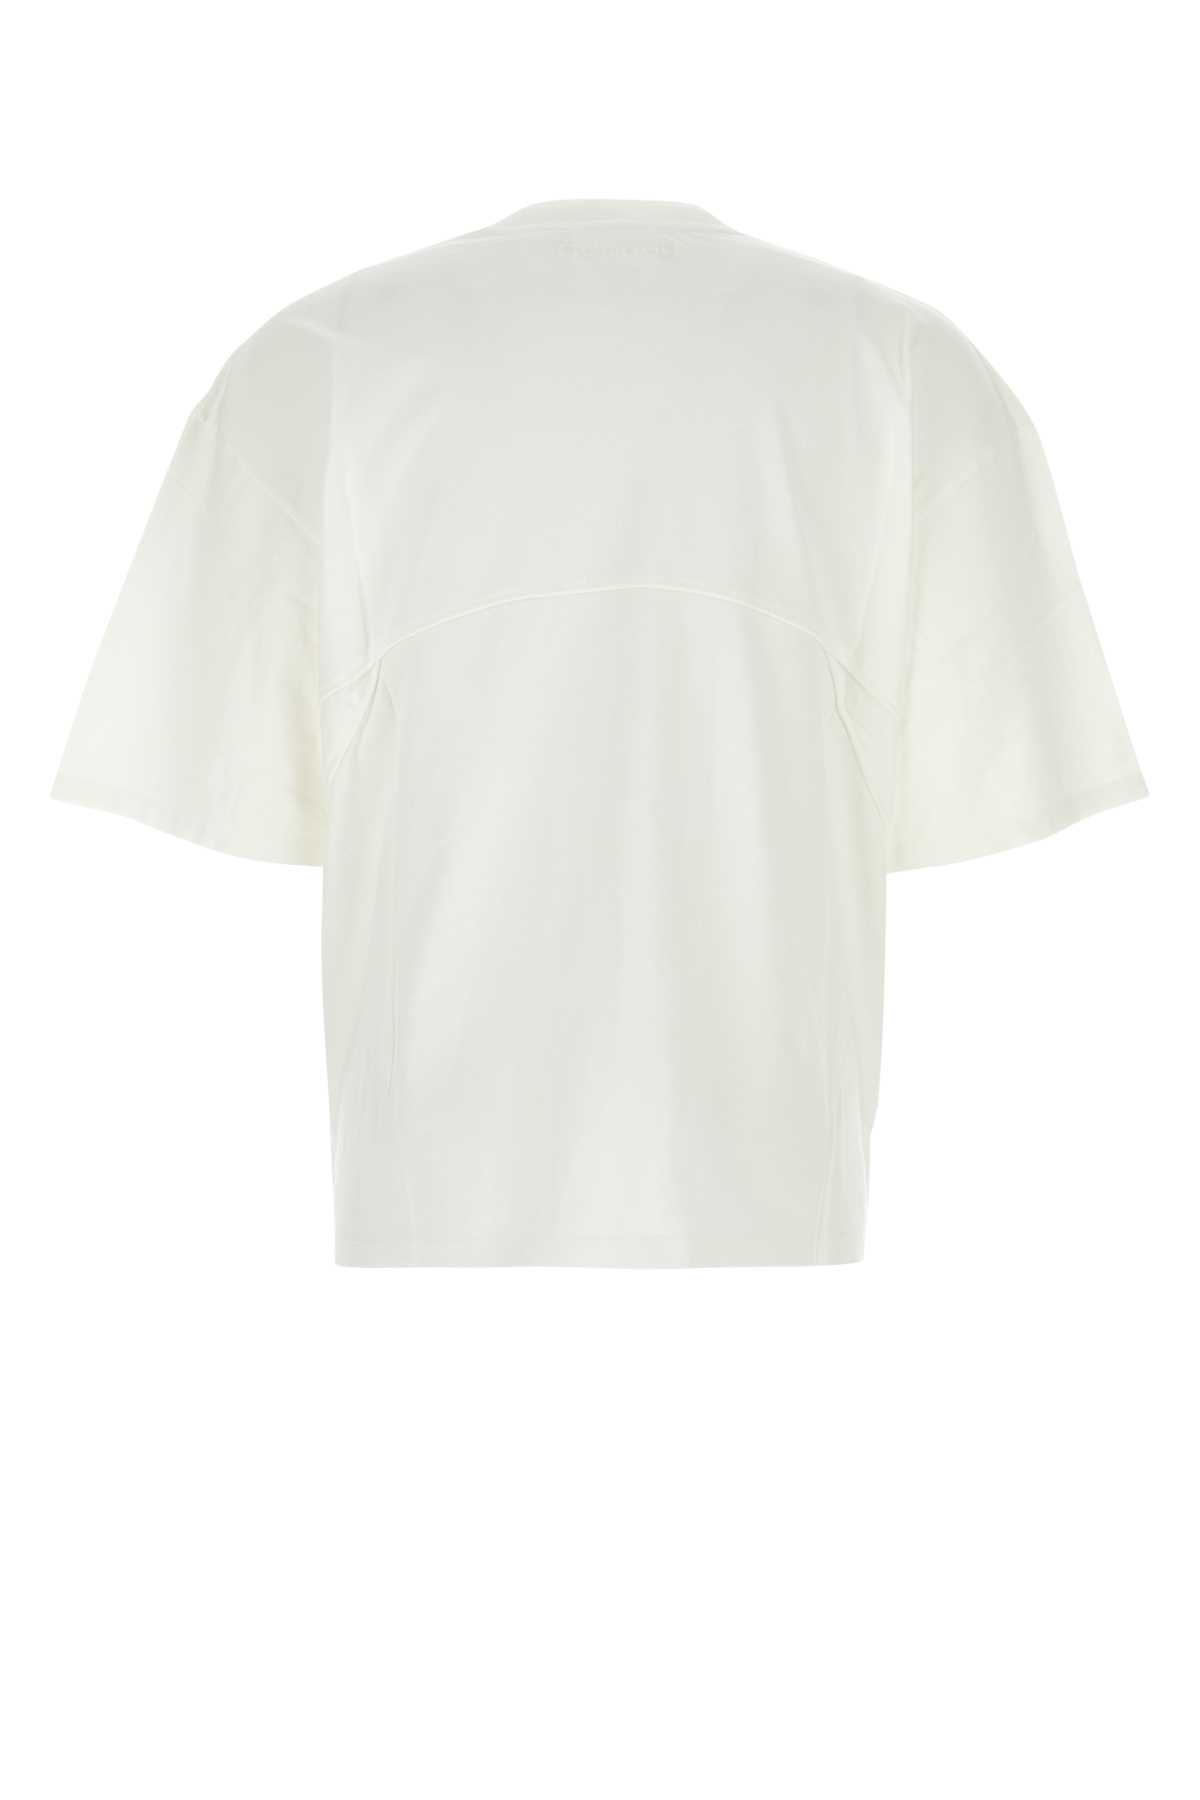 Reebok White Cotton Oversize T-shirt In Bones